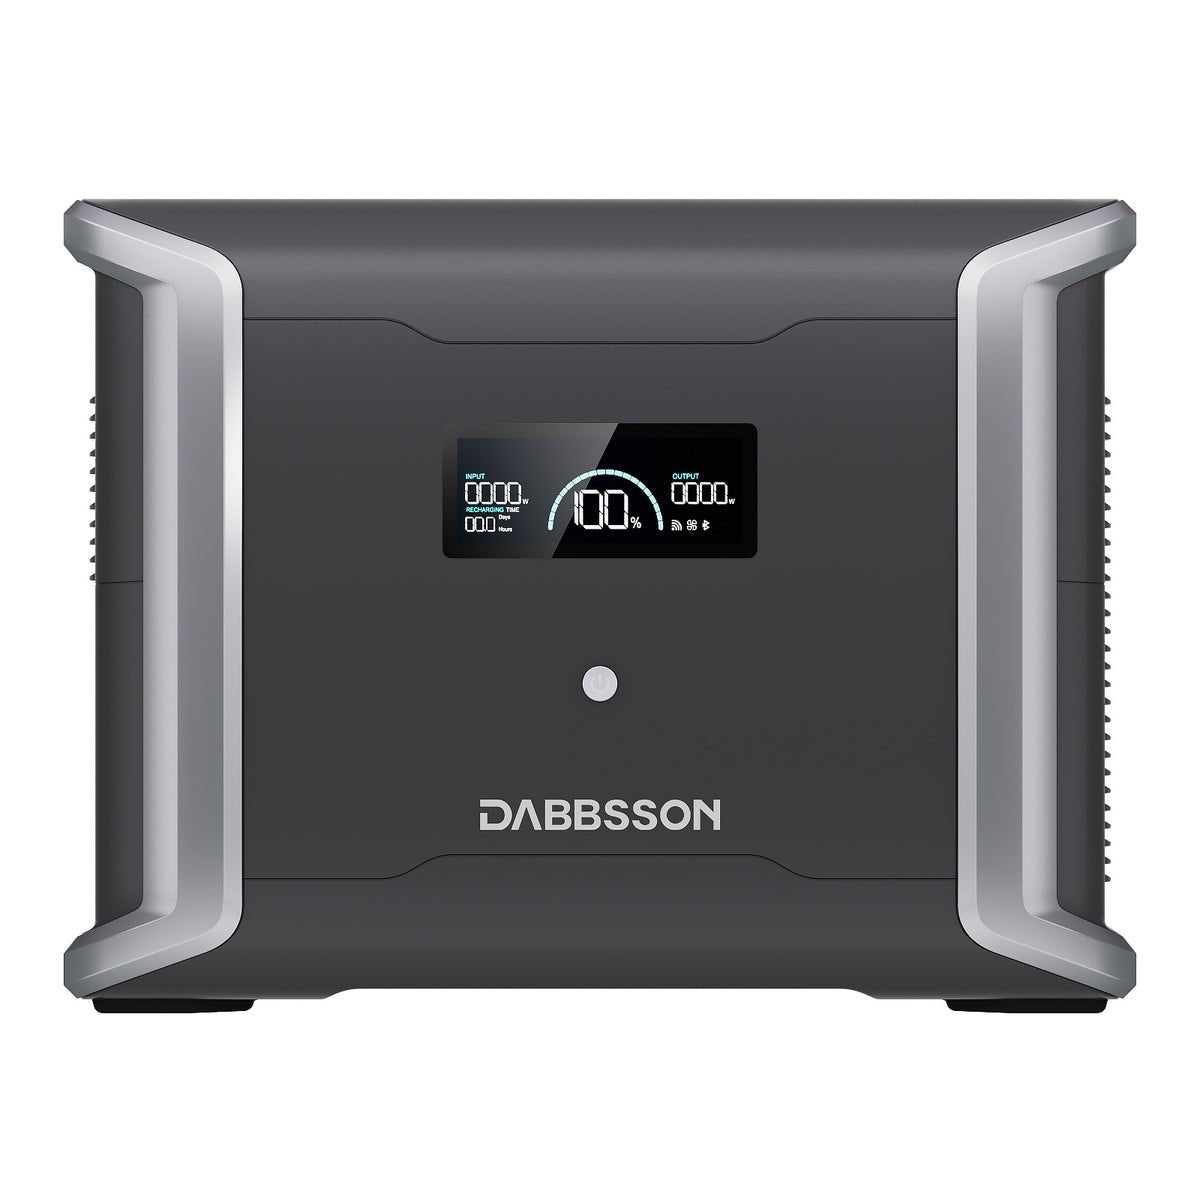 DBS1700B 容量拡張バッテリー DBS1300専用のエクストラバッテリー 1700Wh - Dabbsson JP